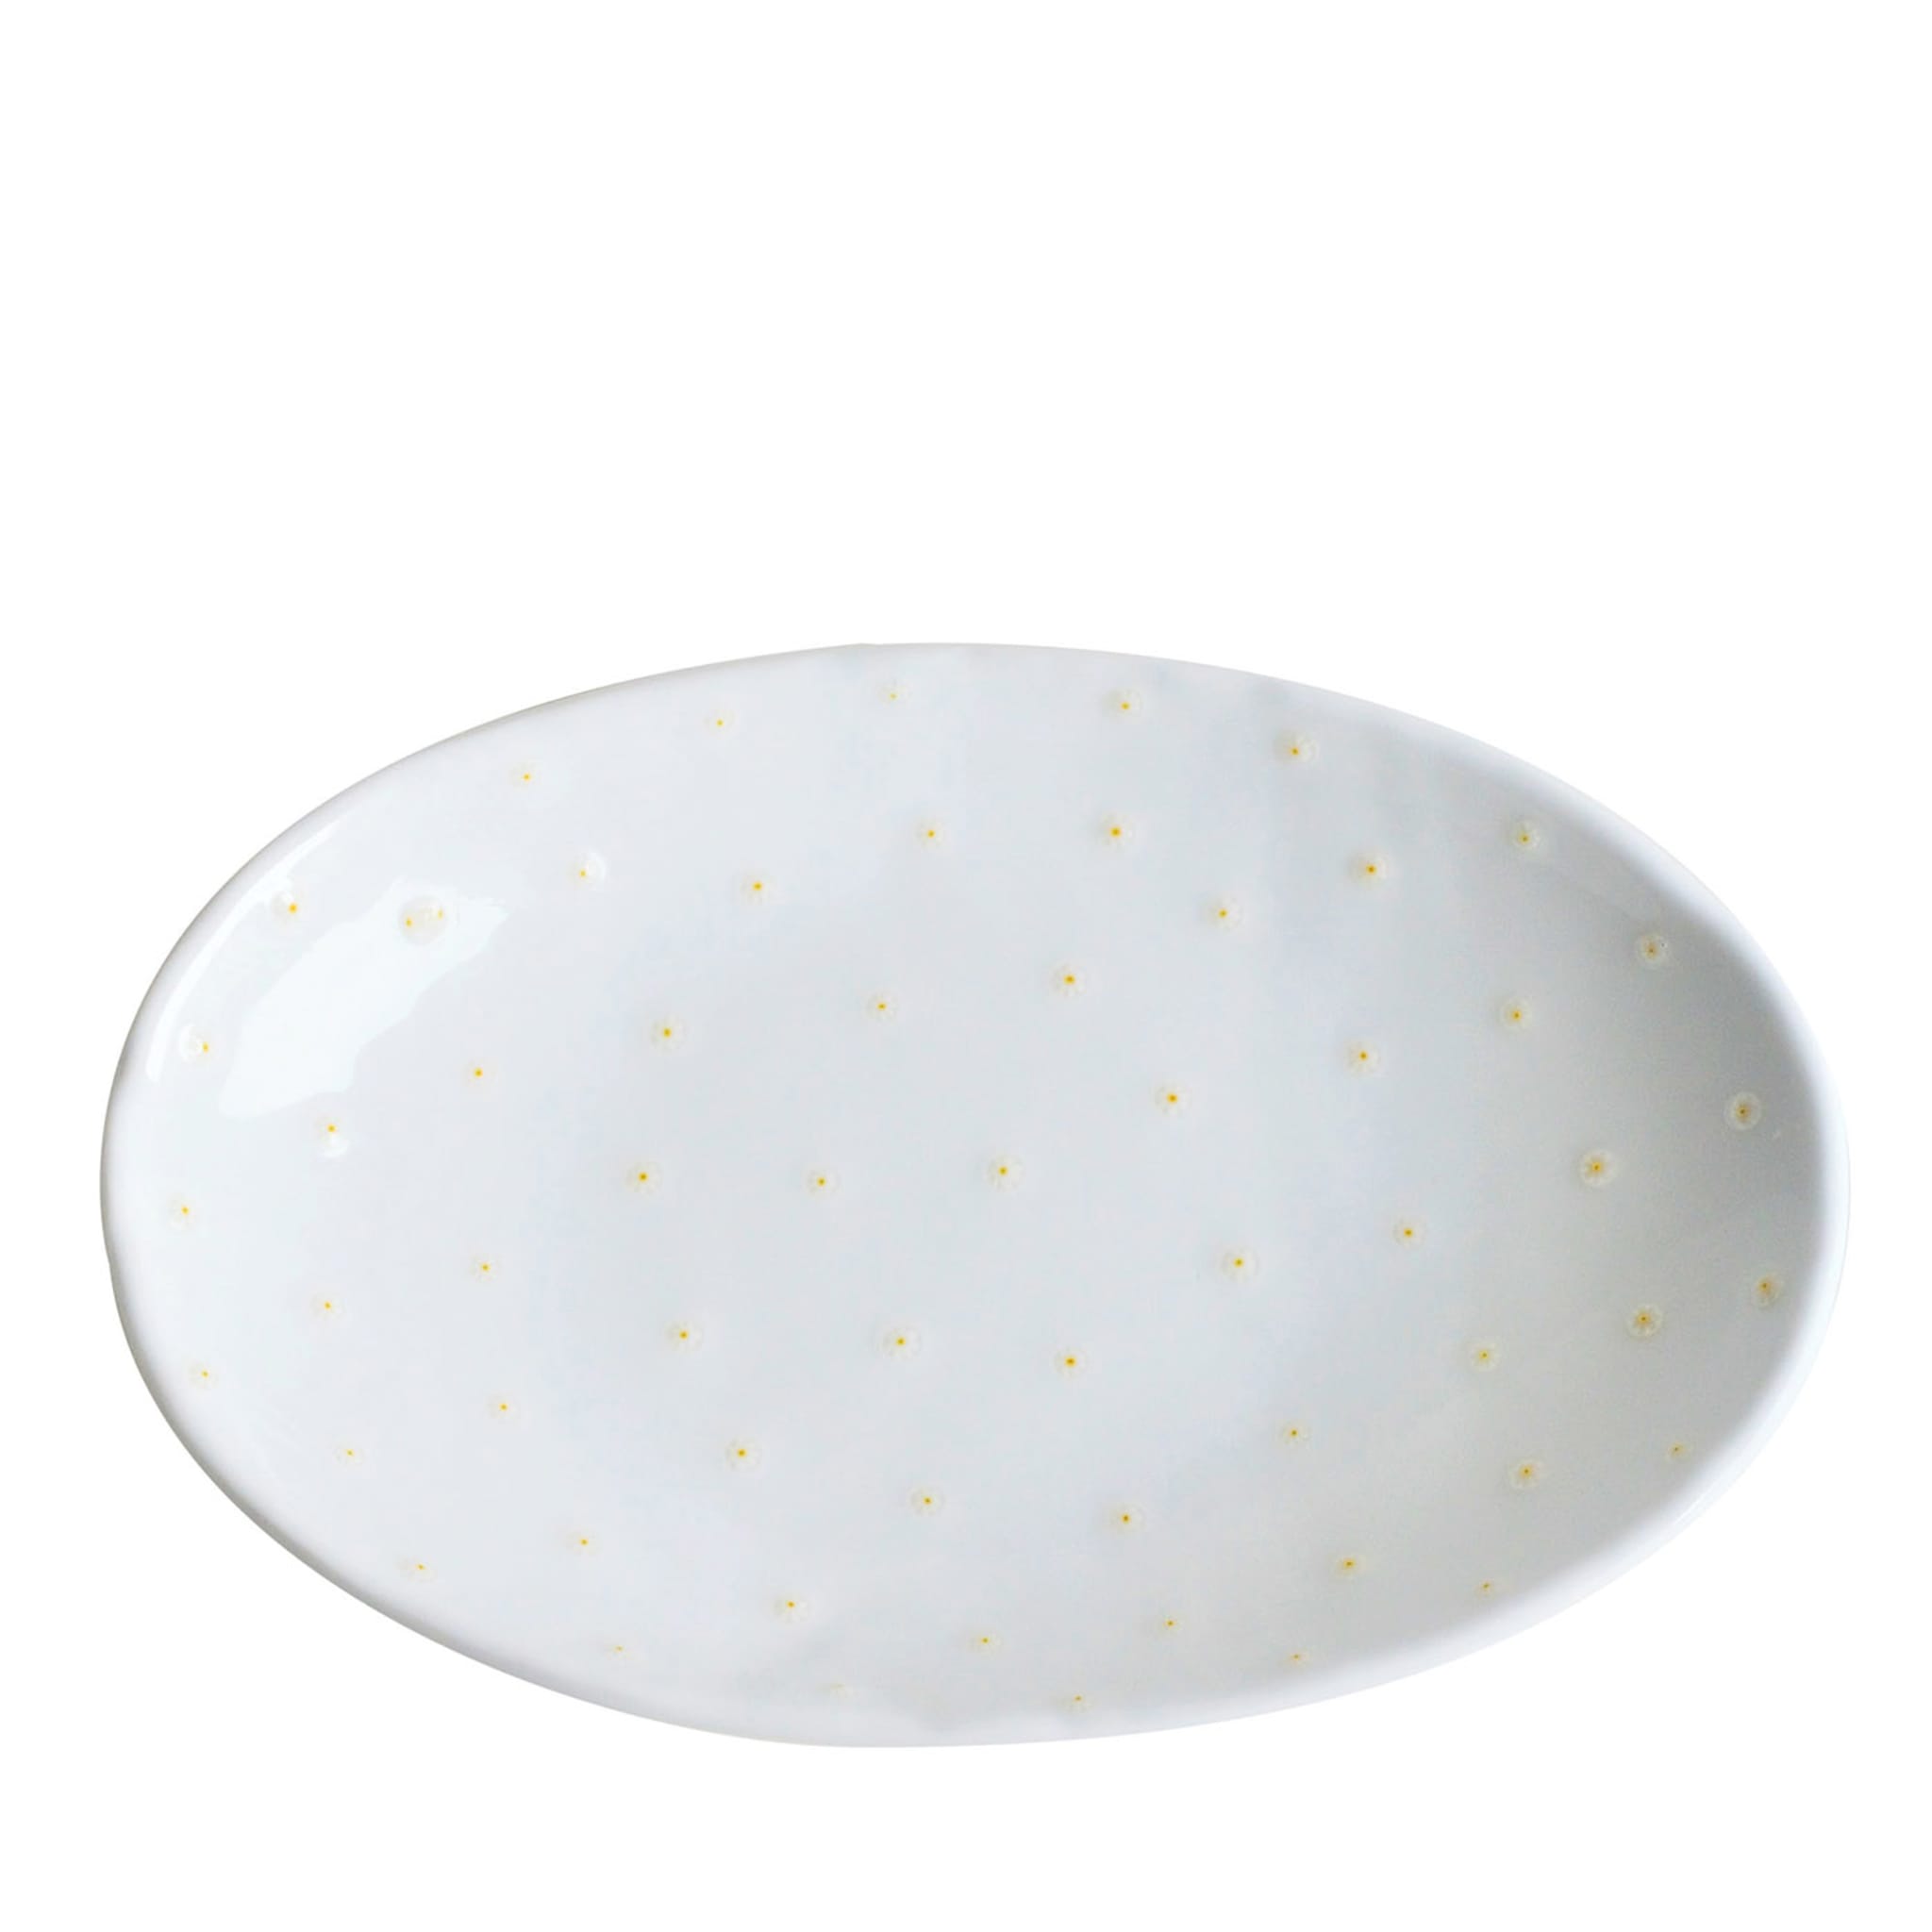 White Serving Platter with Daisy Murrine glass inlays  - Main view